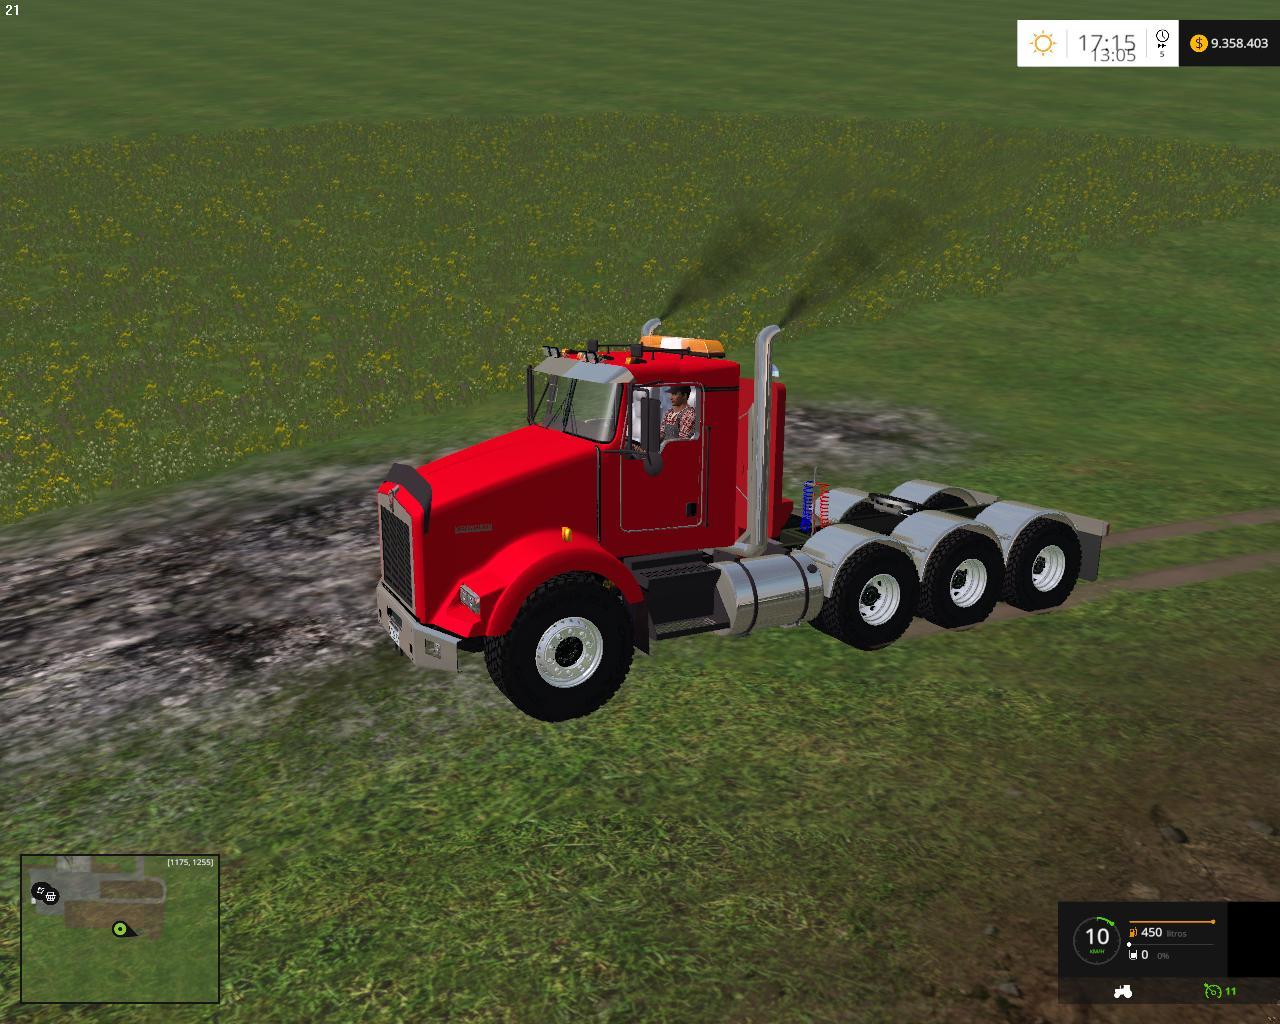 Kenworth T800 V1 Truck 6 Farming Simulator 19 17 15 Mod 5314